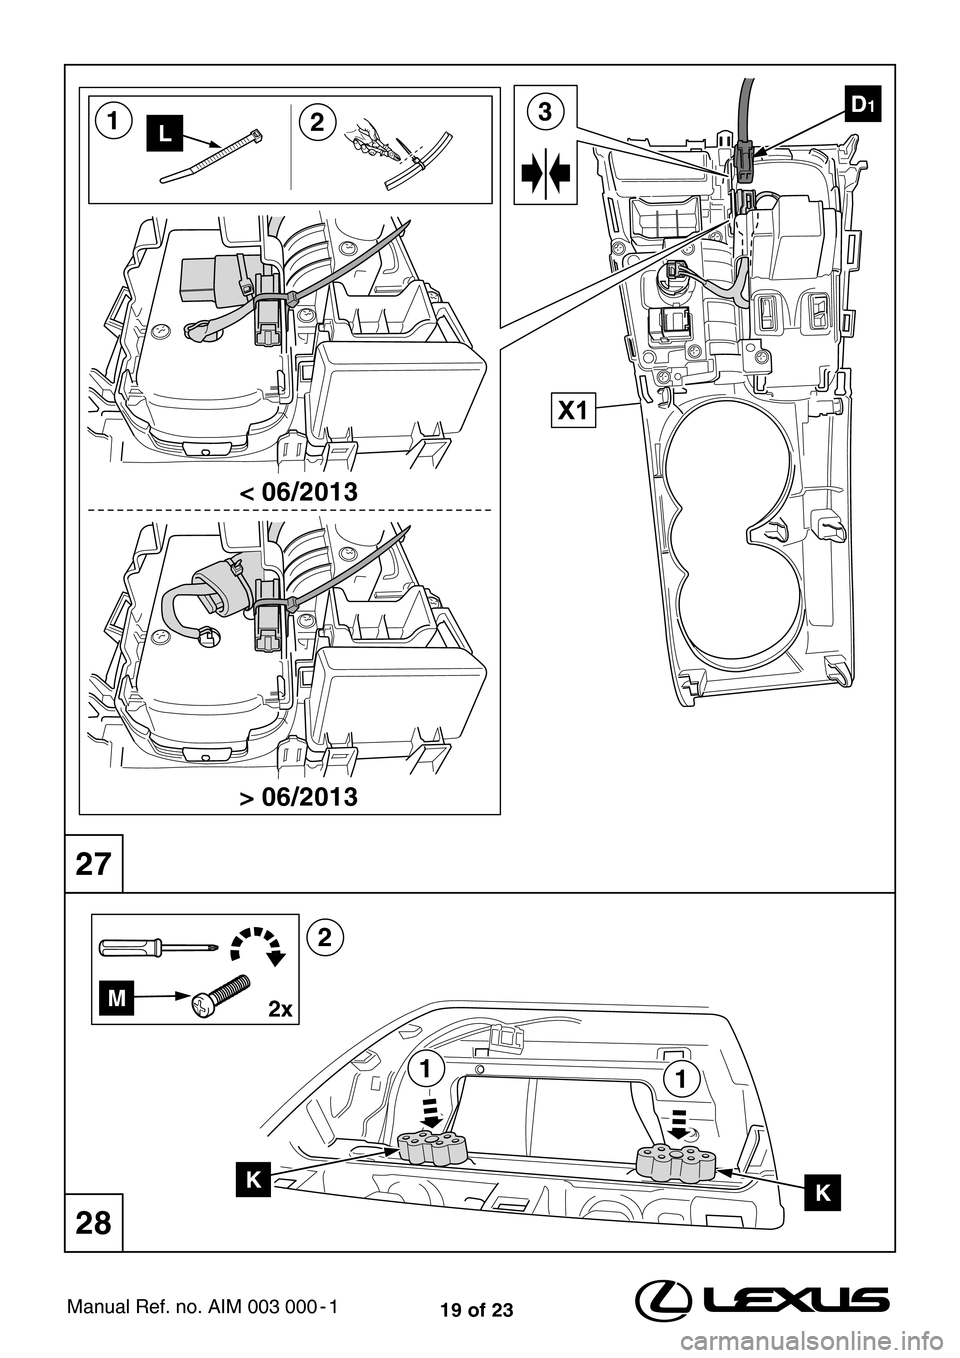 Lexus CT200h 2010  Navigation (LHD) (in English) 19 of 23Manual Ref. no. AIM 003 000 - 1
L
D131
X1
2
< 06/2013 
> 06/2013 
M2x
KK
11
2
27
28 